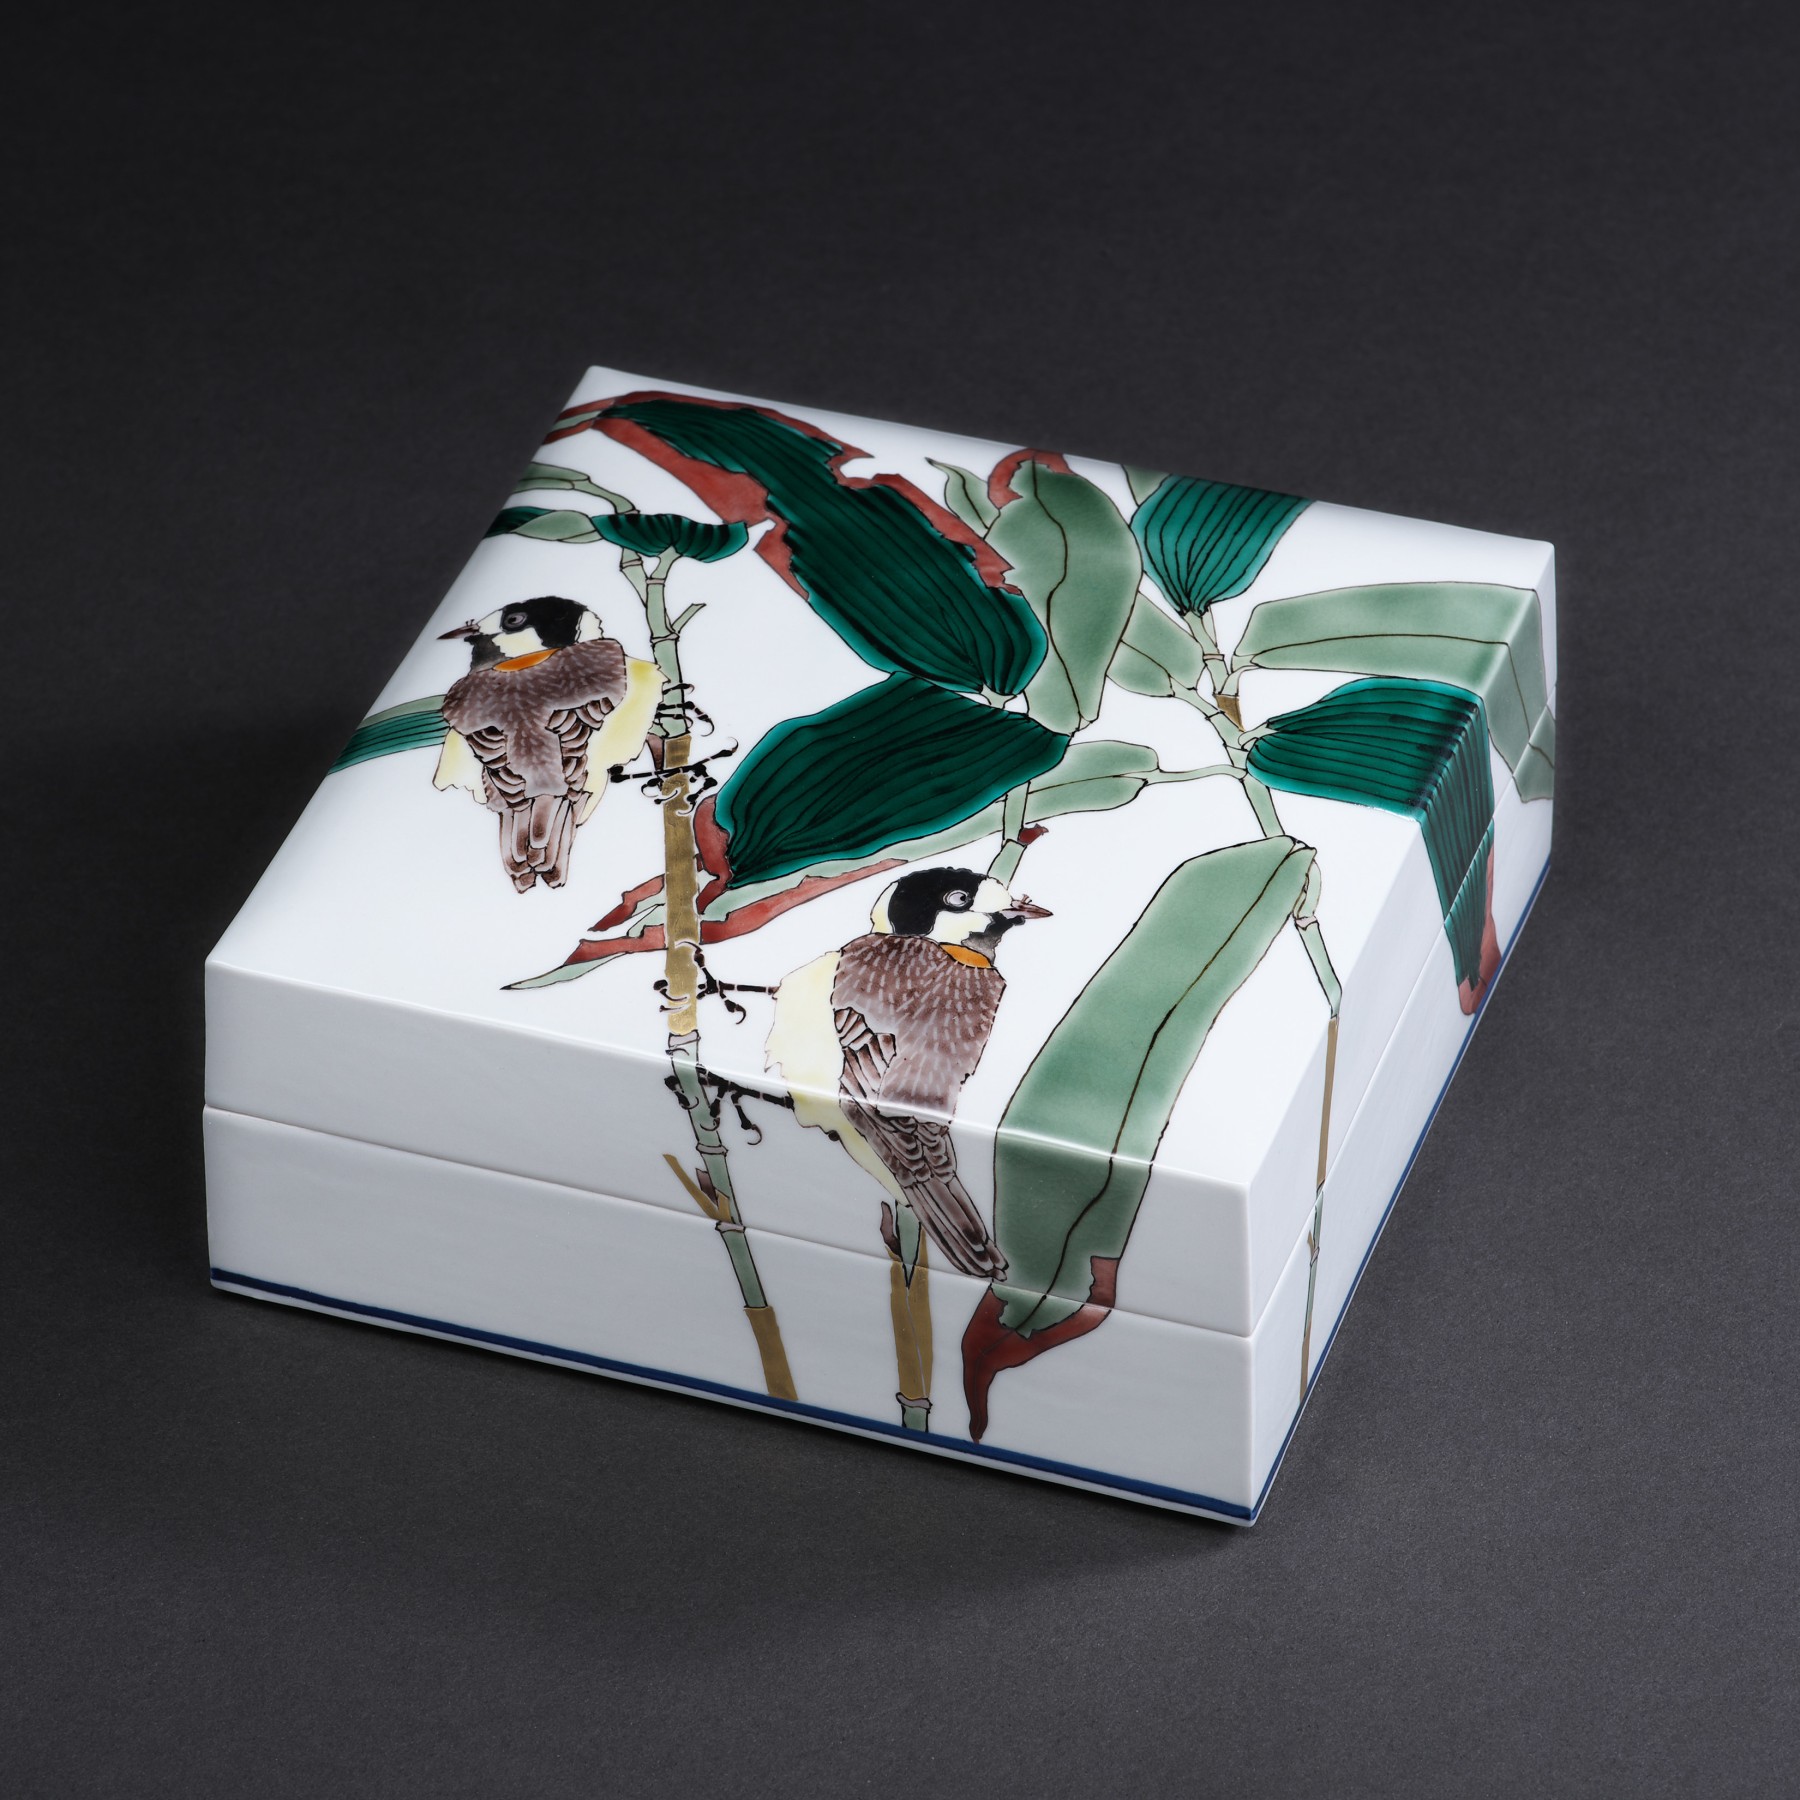 Takegoshi Jun (b. 1948), Porcelain covered box depicting titmice and bamboo